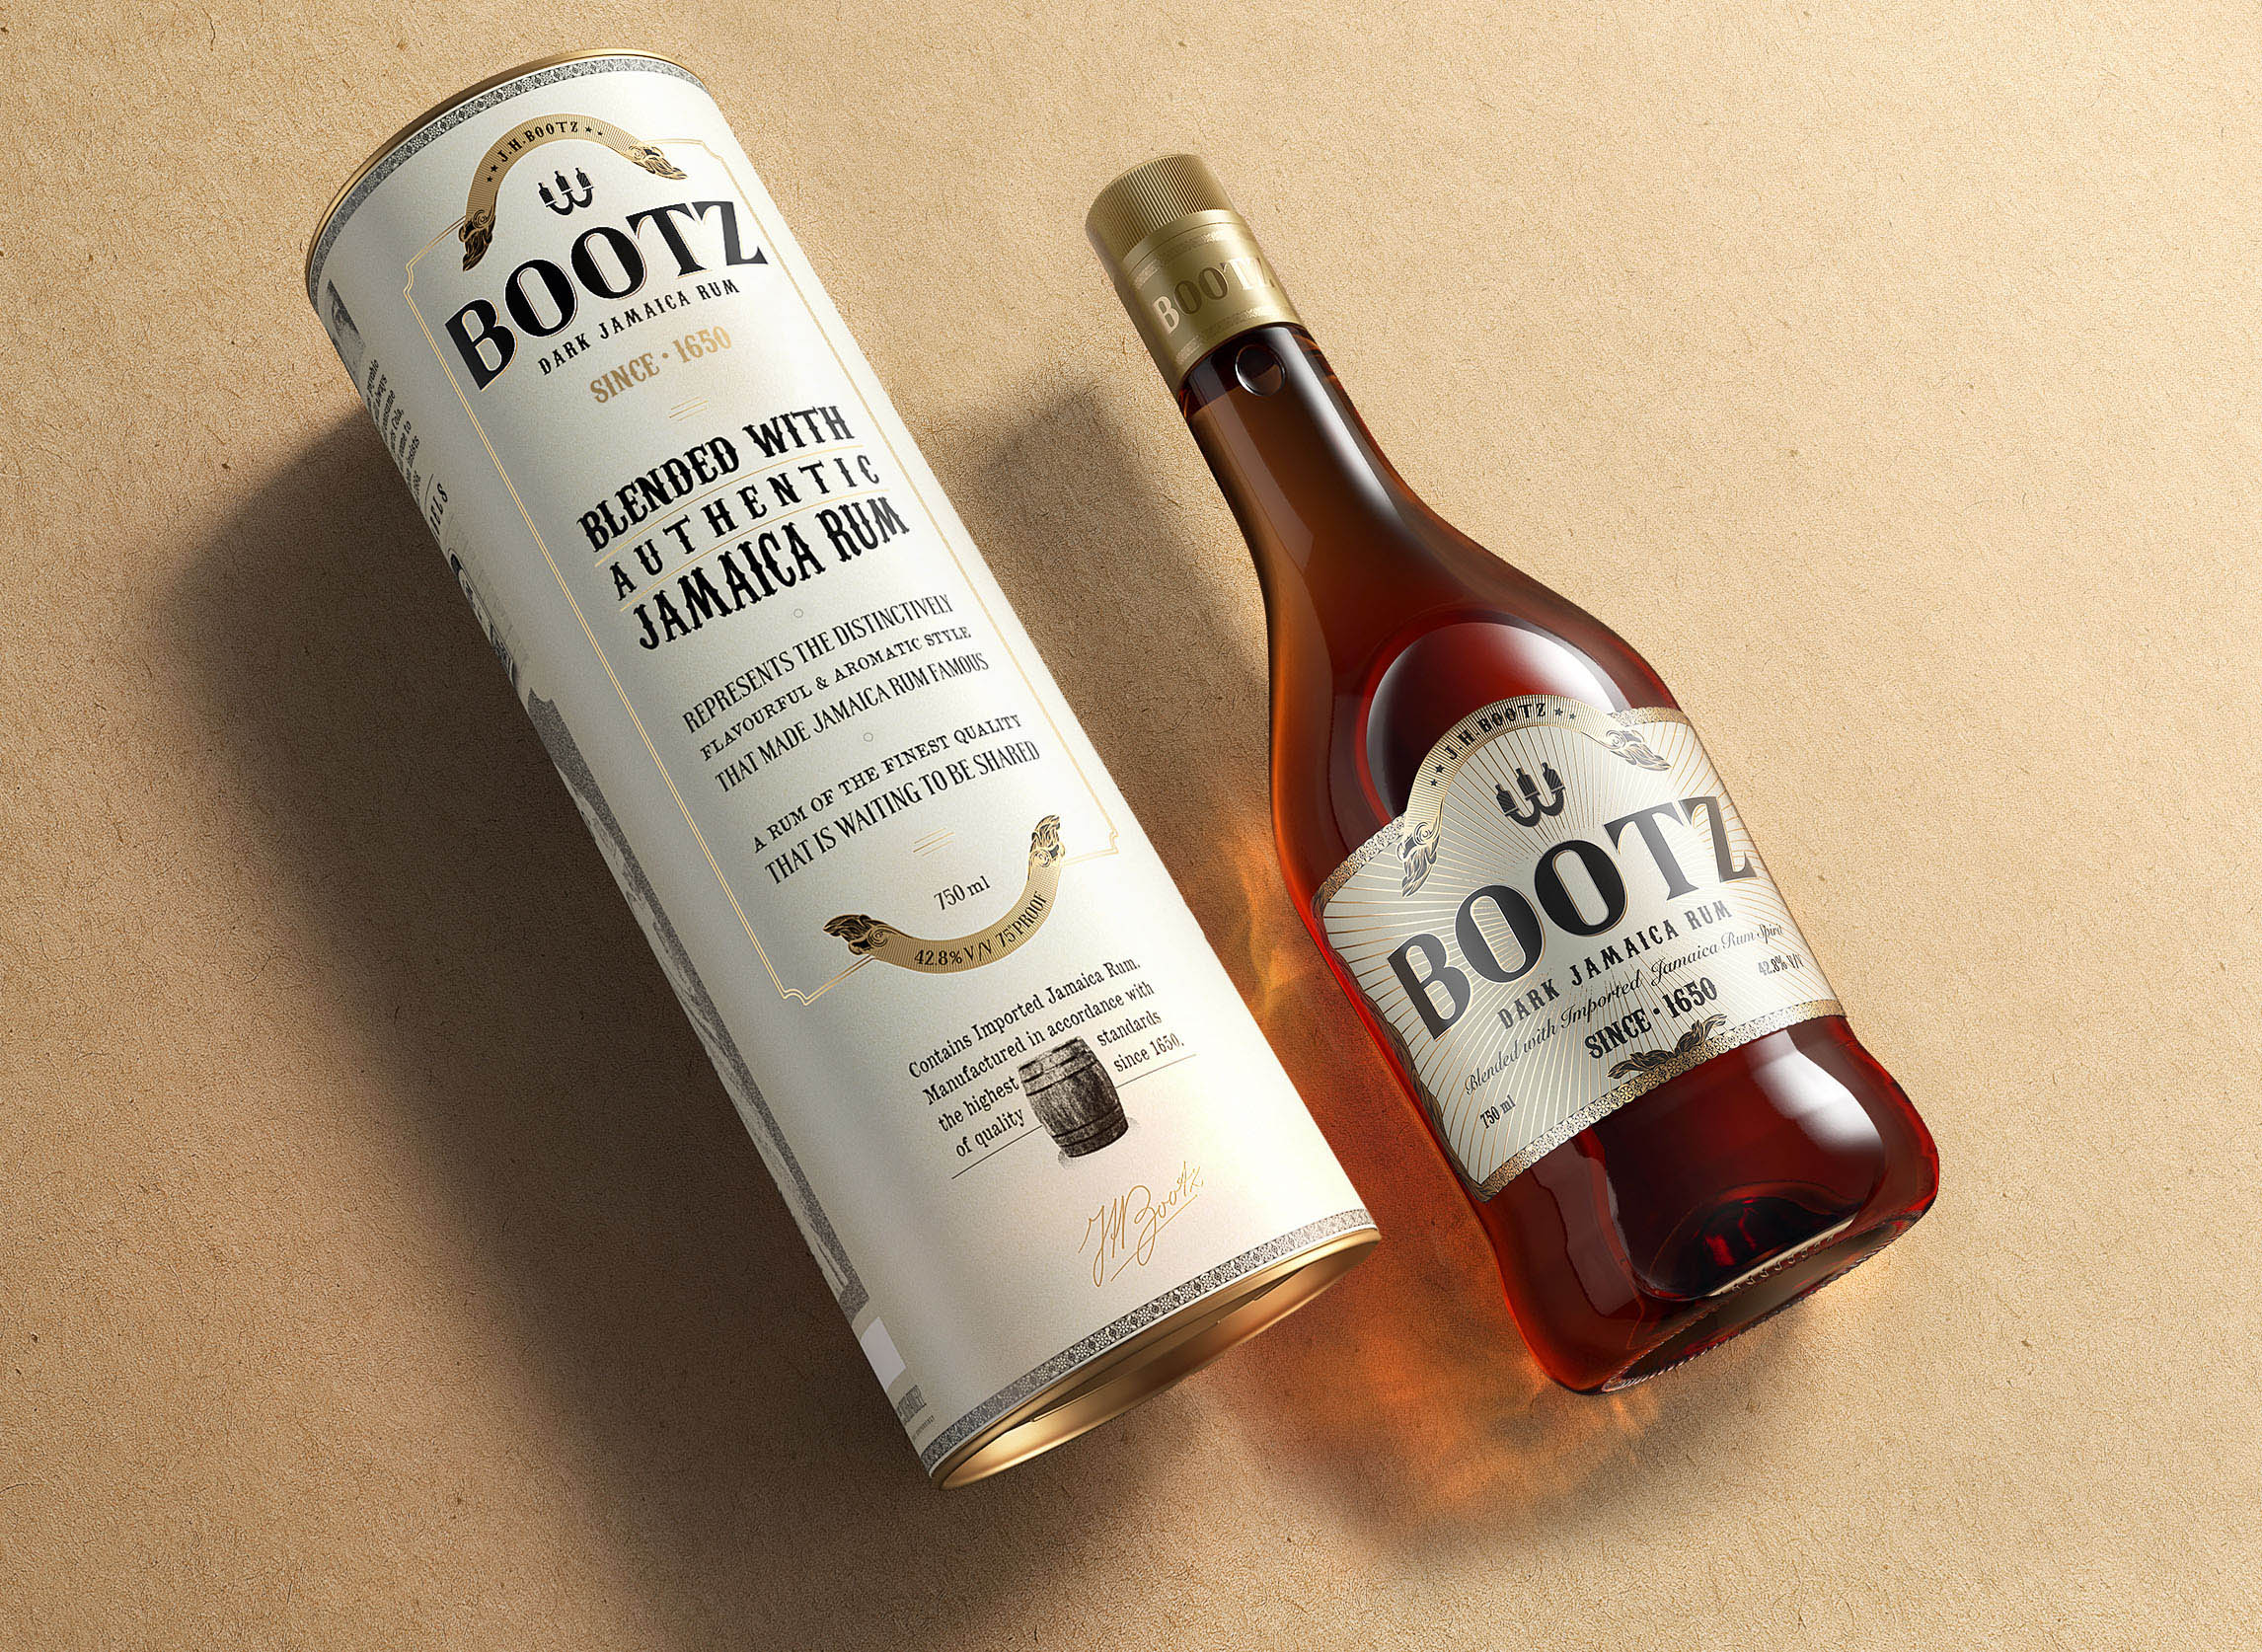 Bootz Dark Jamaica Rum Repositioning Via Packaging Design In The Indian Market